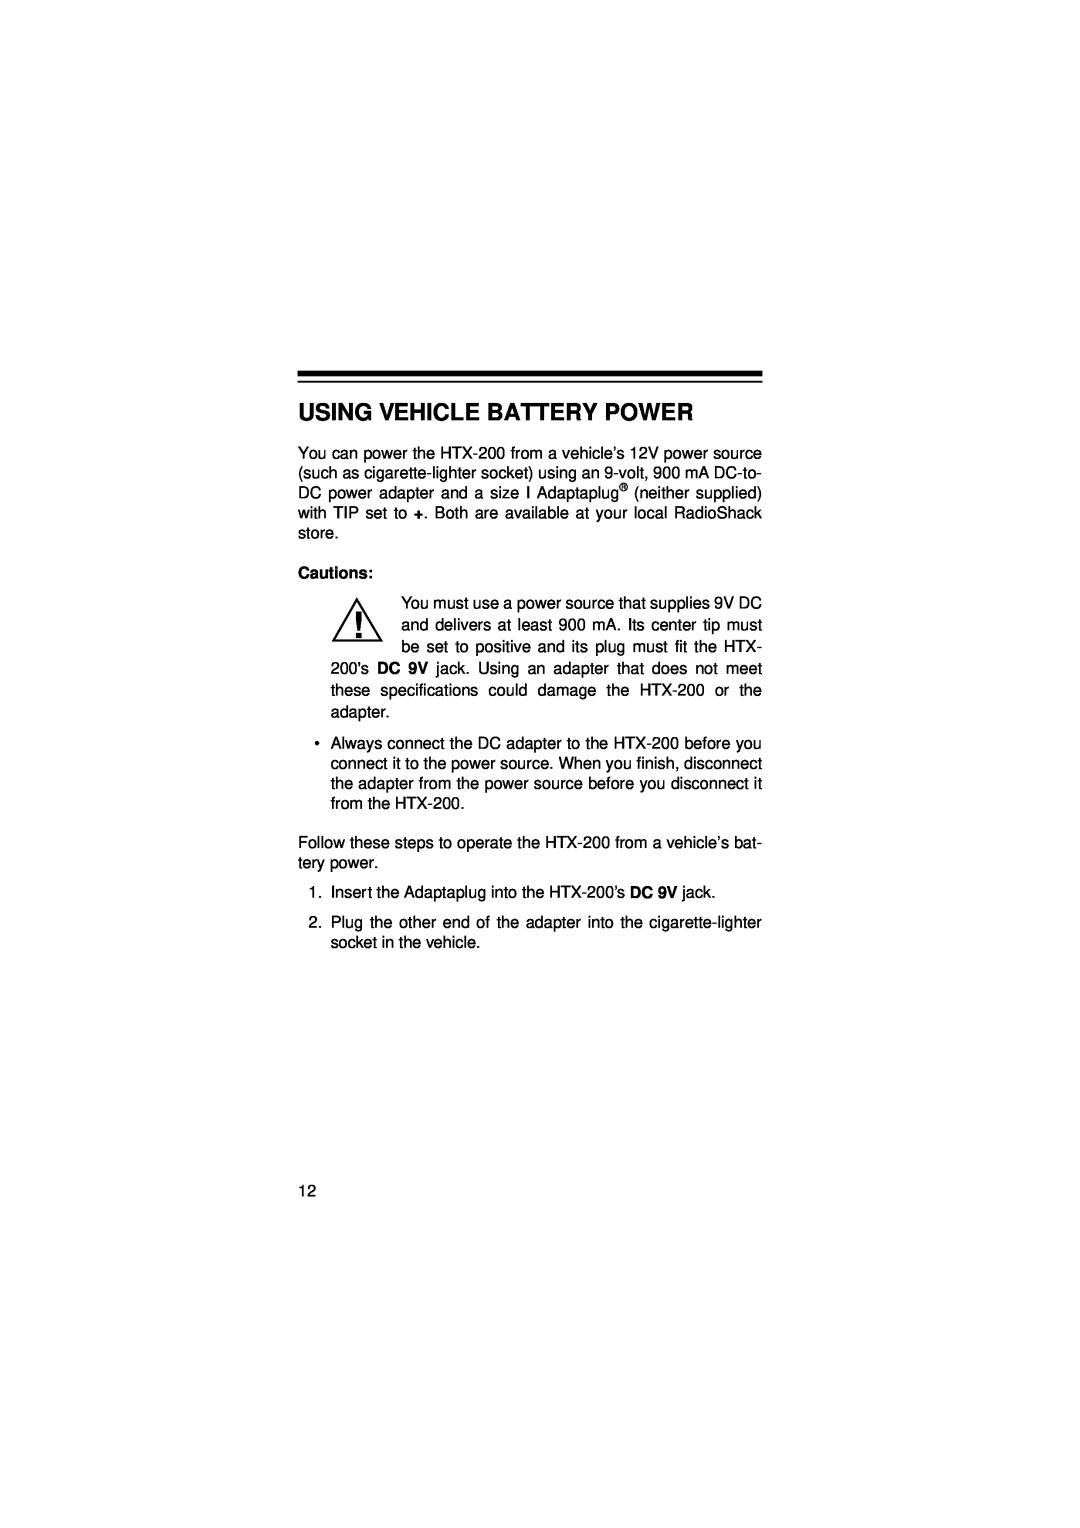 Radio Shack HTX-200 owner manual Using Vehicle Battery Power 